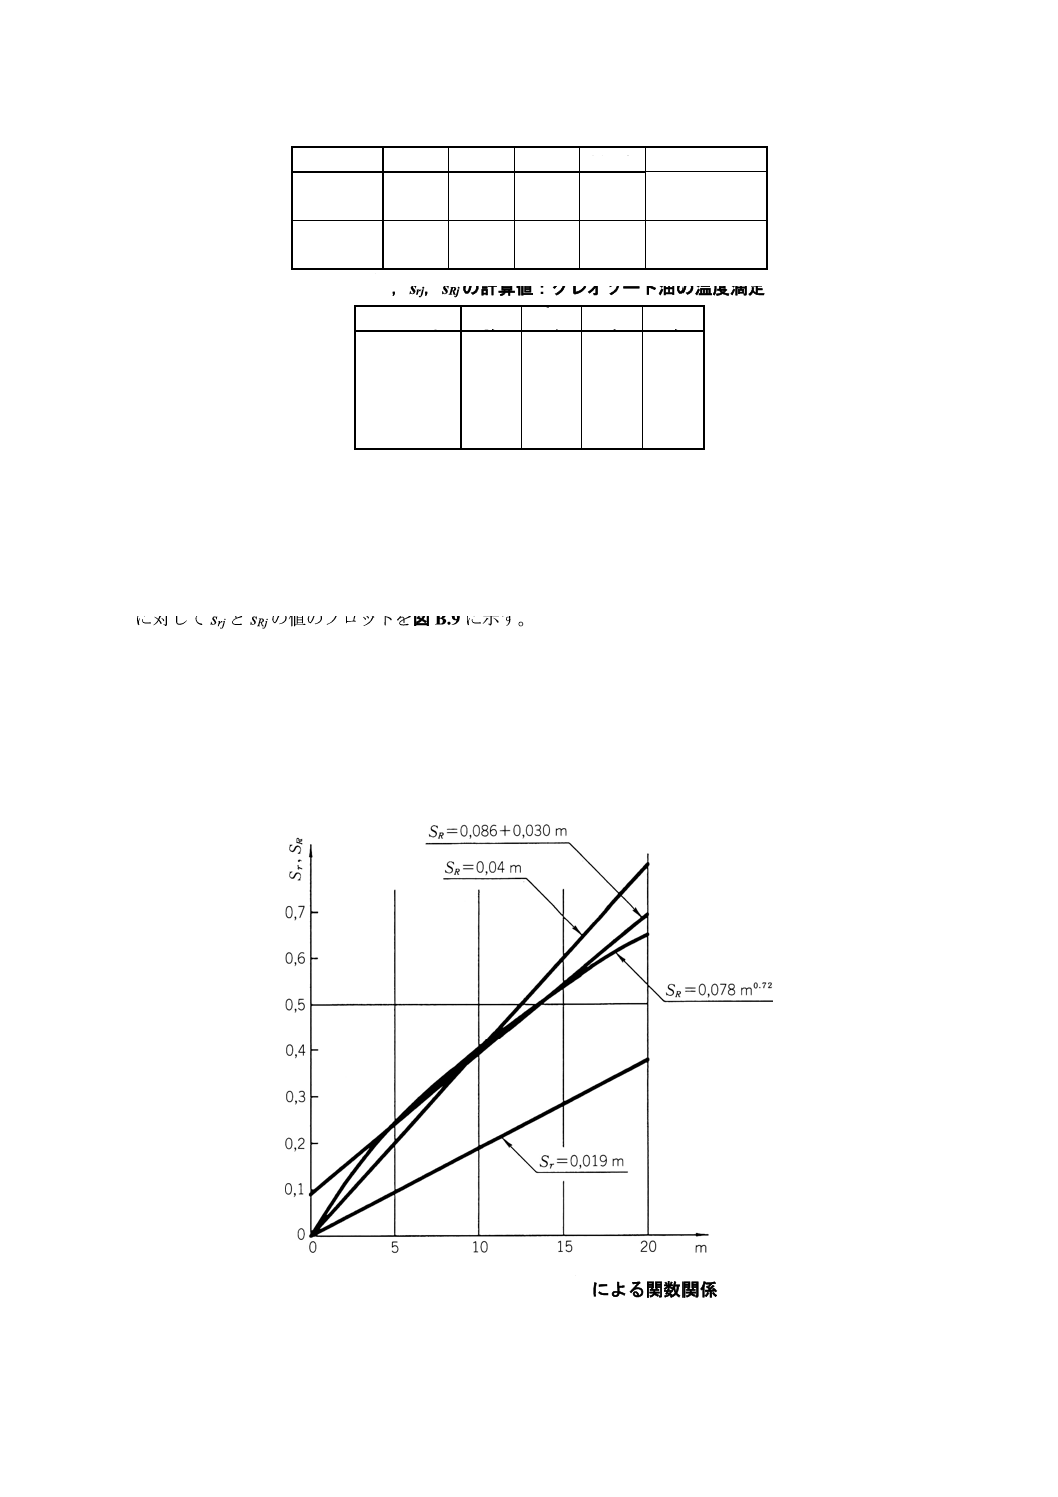 JISZ8402-2:1999 測定方法及び測定結果の精確さ（真度及び精度）－第２ 